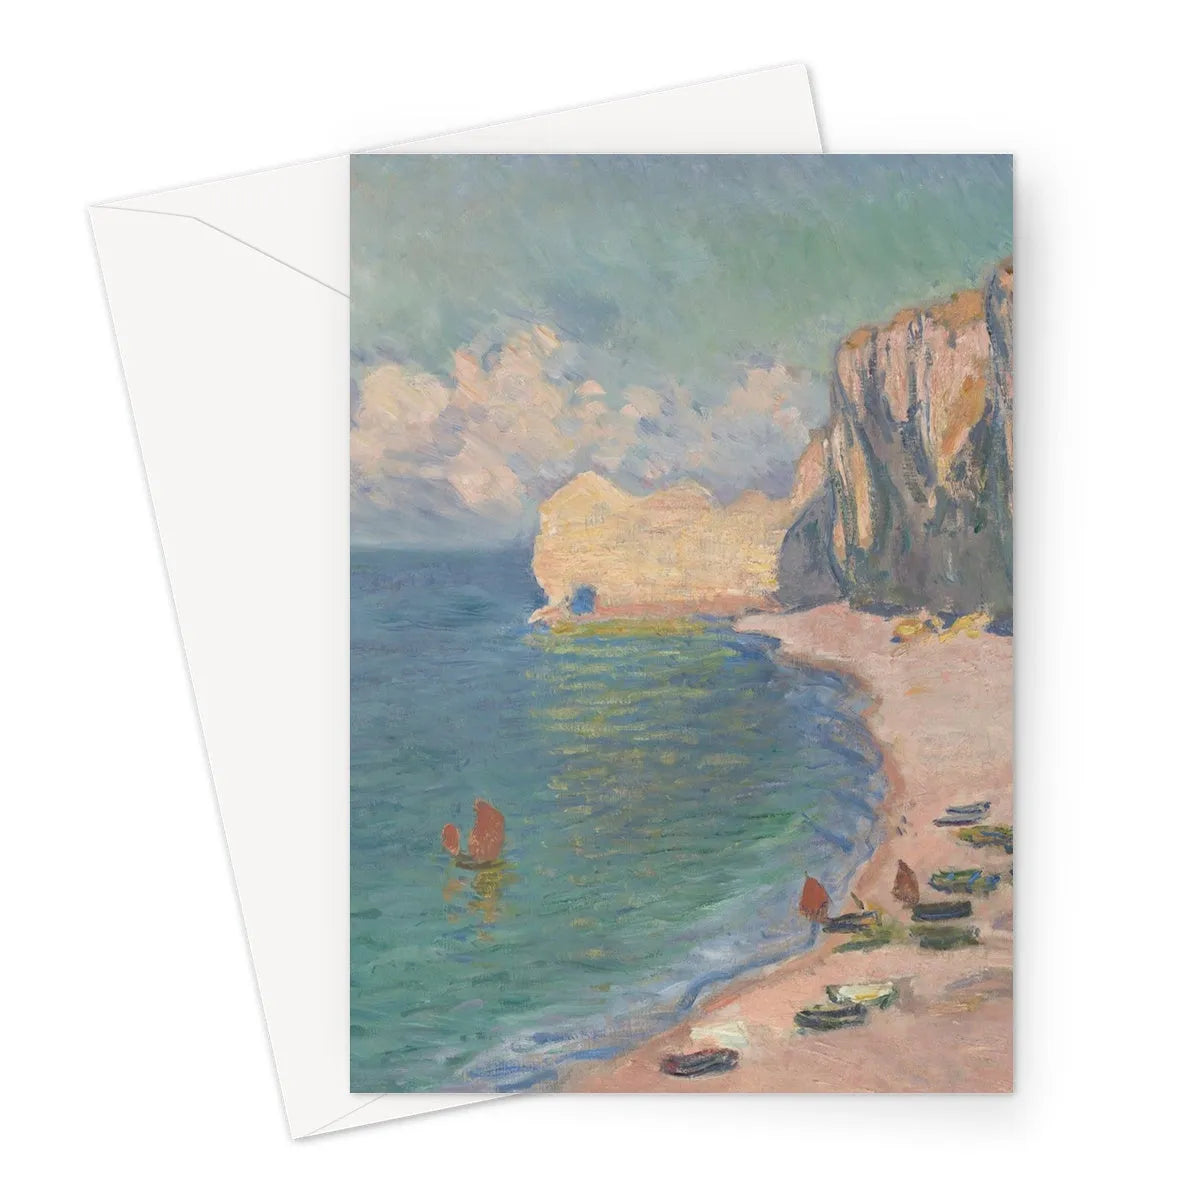 étretat By Claude Monet Greeting Card - A5 Portrait / 1 Card - Notebooks & Notepads - Aesthetic Art